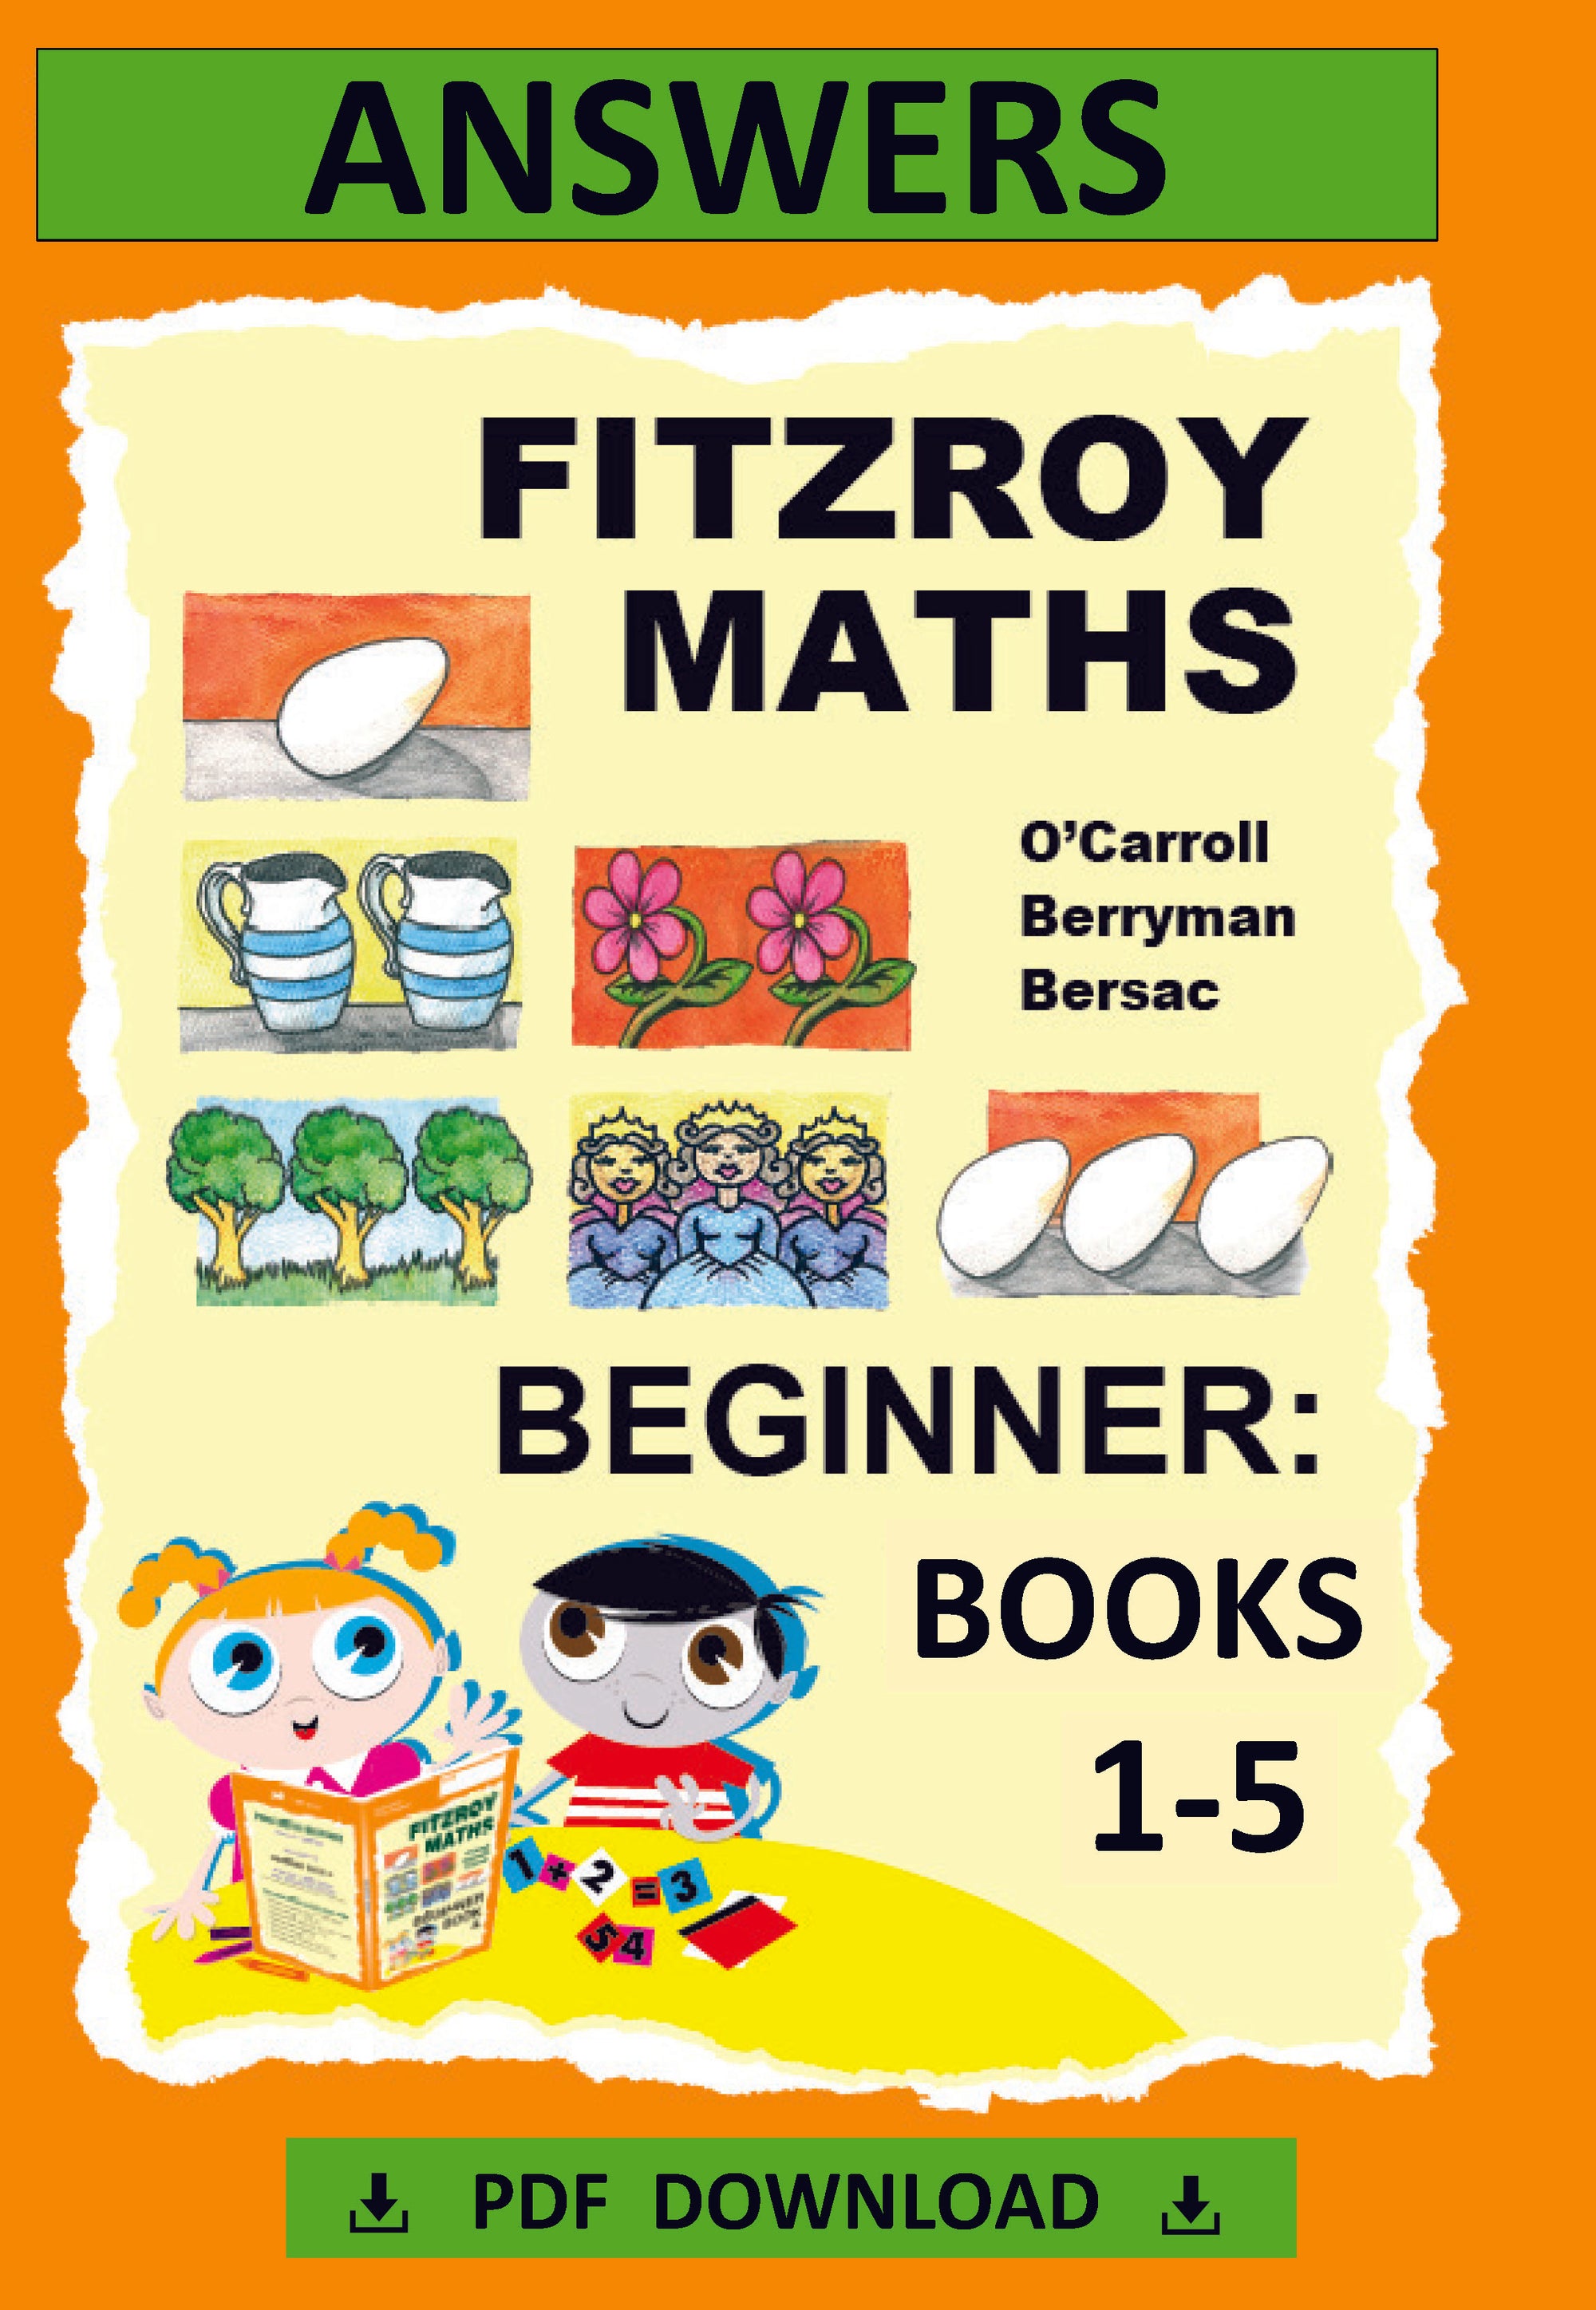 Fitzroy Maths Answers 1-5